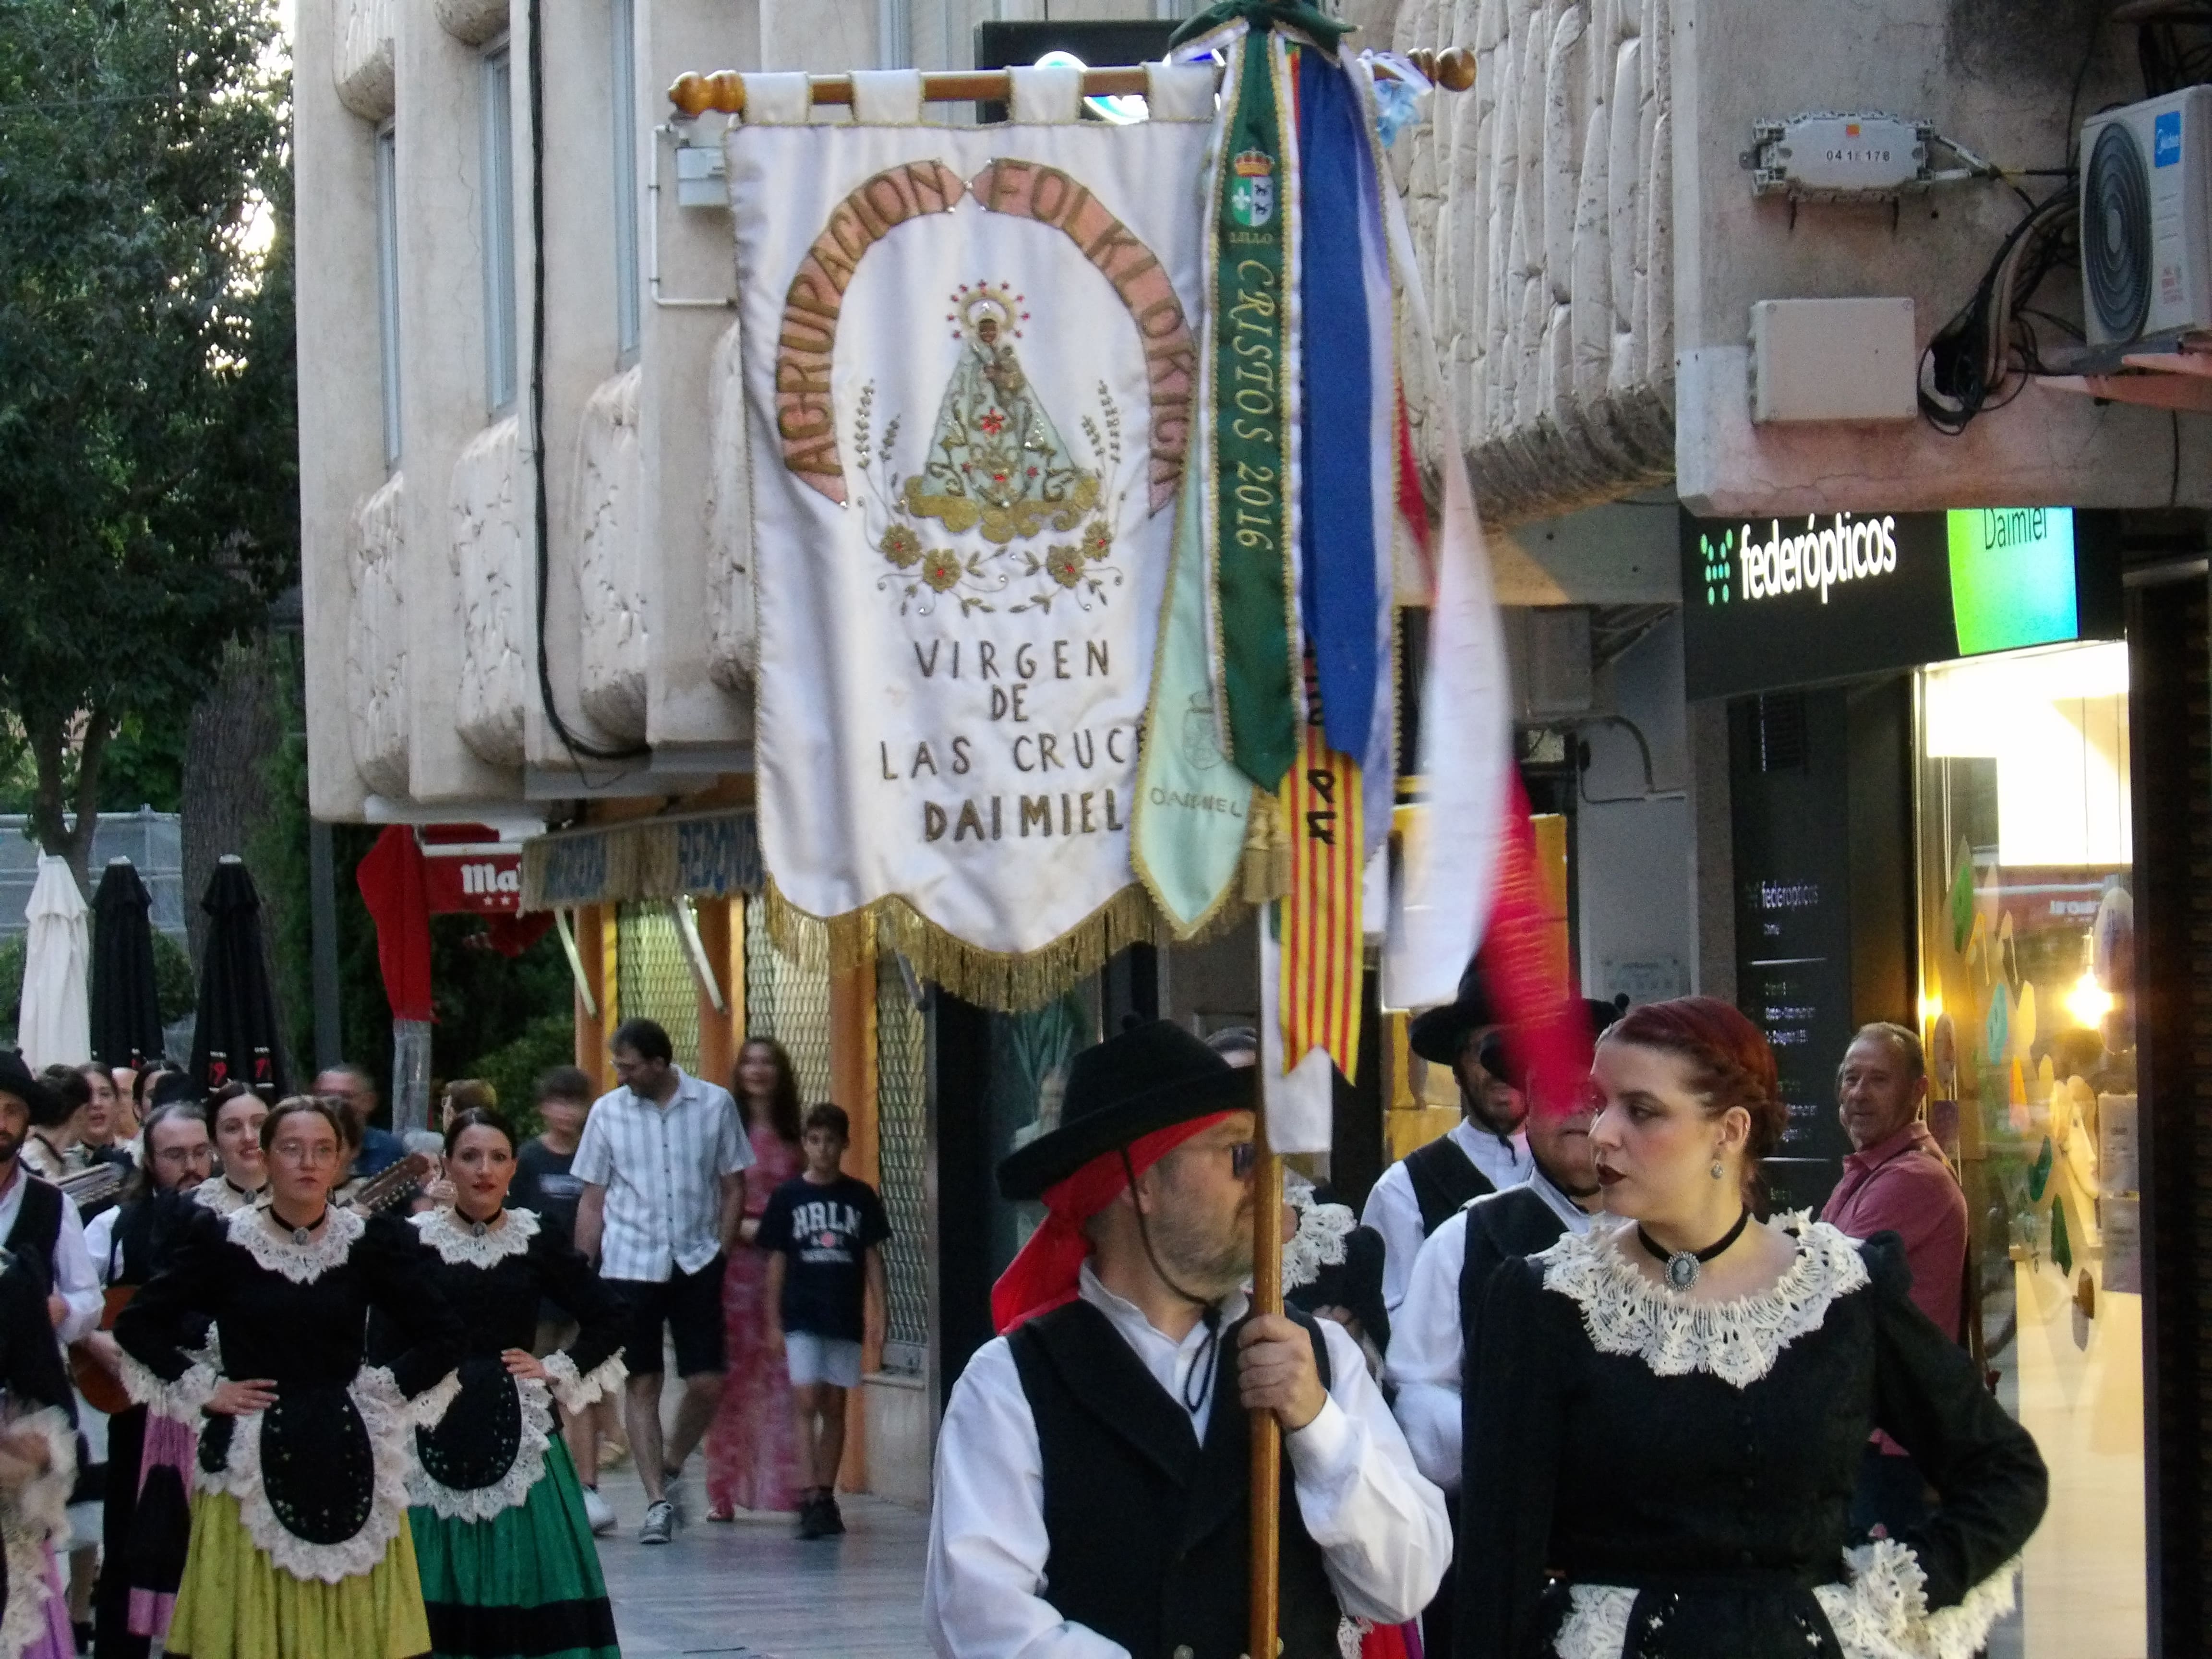 Banderín asociación folklórica Virgen de las Cruces